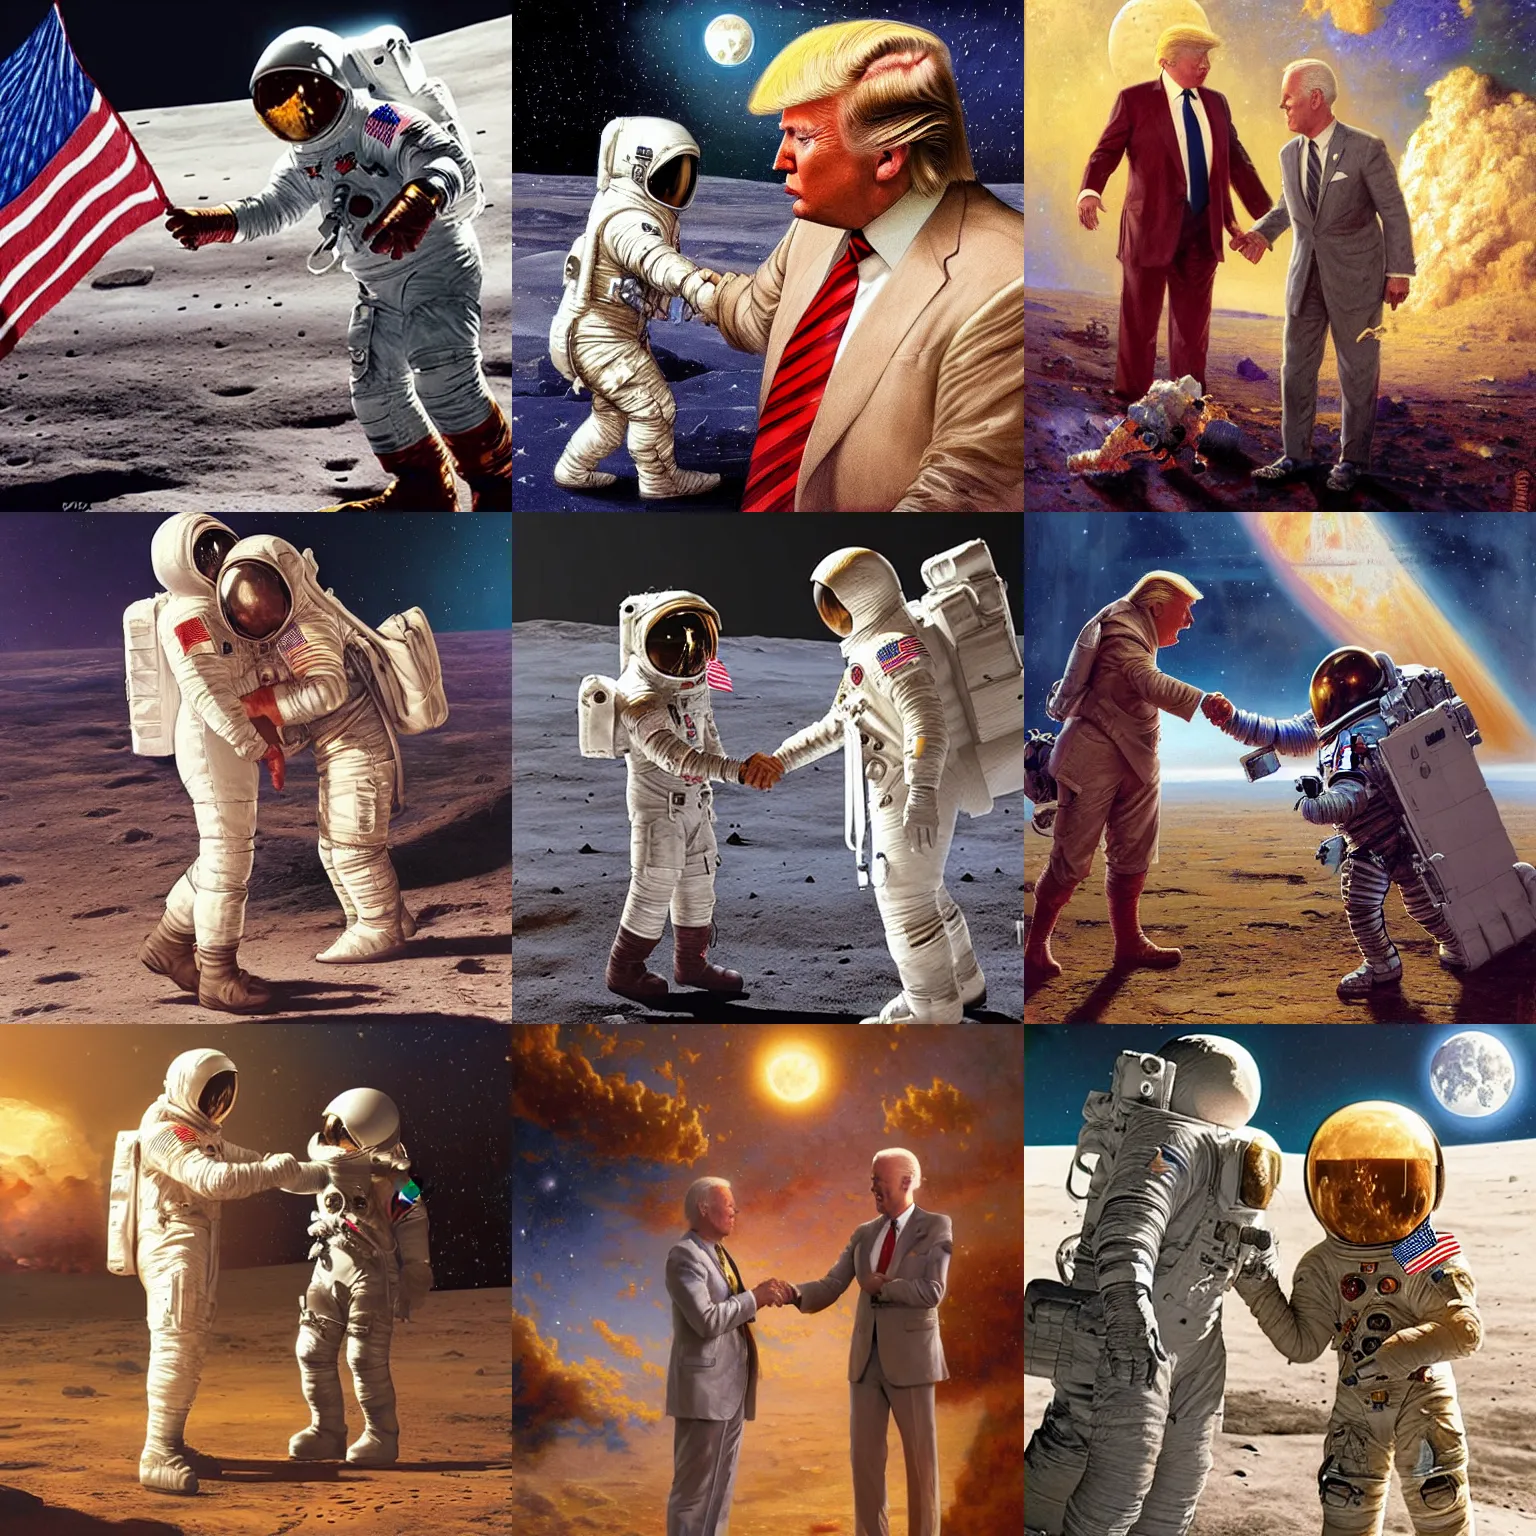 Prompt: hyperrealistic cinematic portrait donald trump shaking hands with joe biden on the moon, highly detailed maya render by gaston bussiere, craig mullins, j. c. leyendecker 8 k